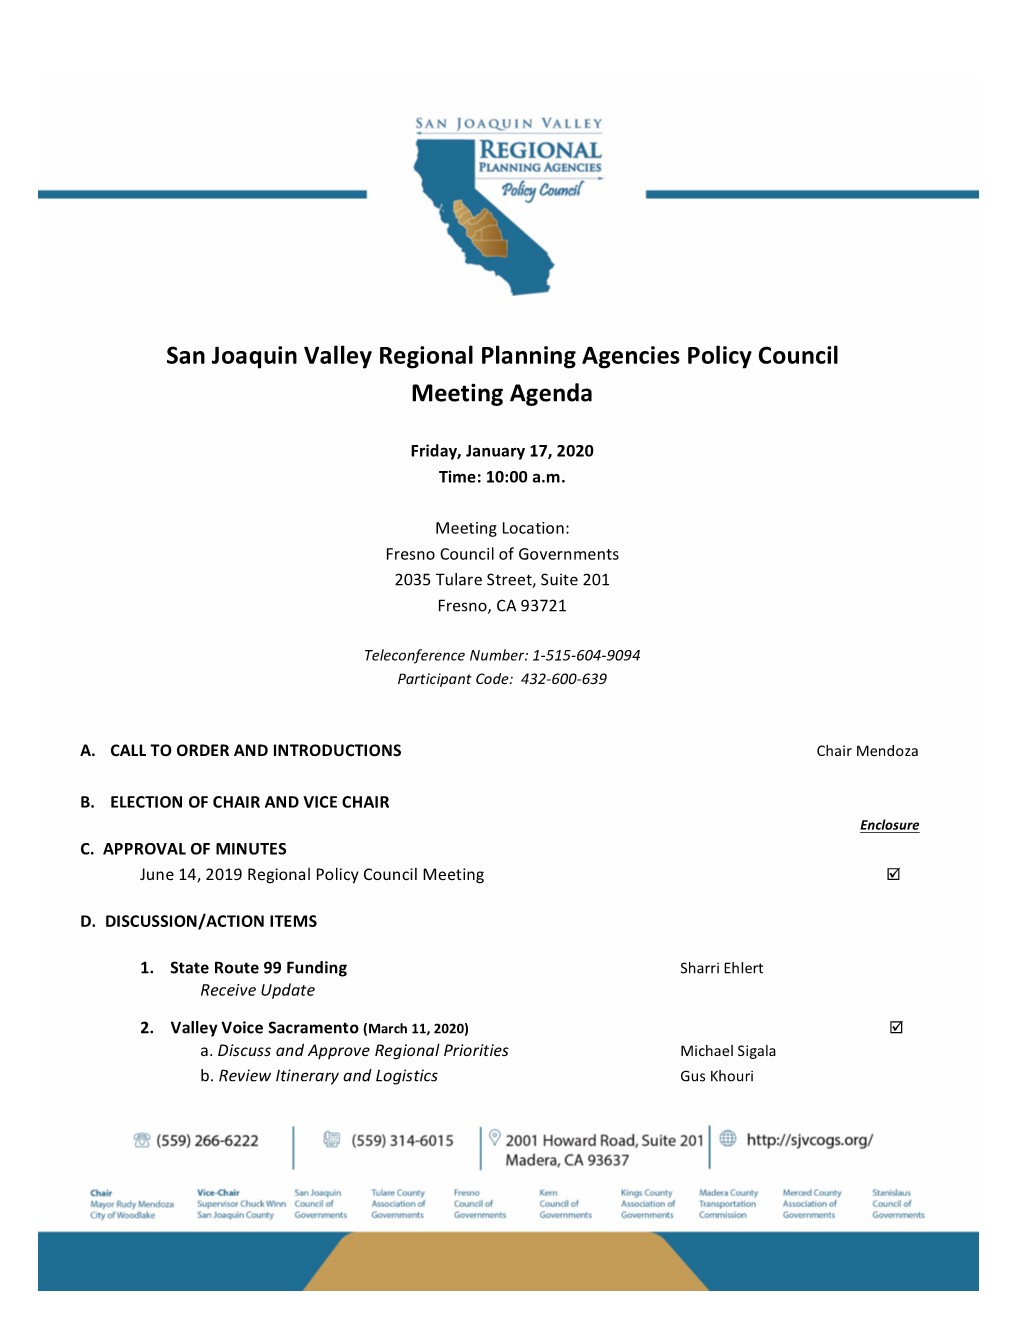 San Joaquin Valley Regional Planning Agencies Policy Council Meeting Agenda